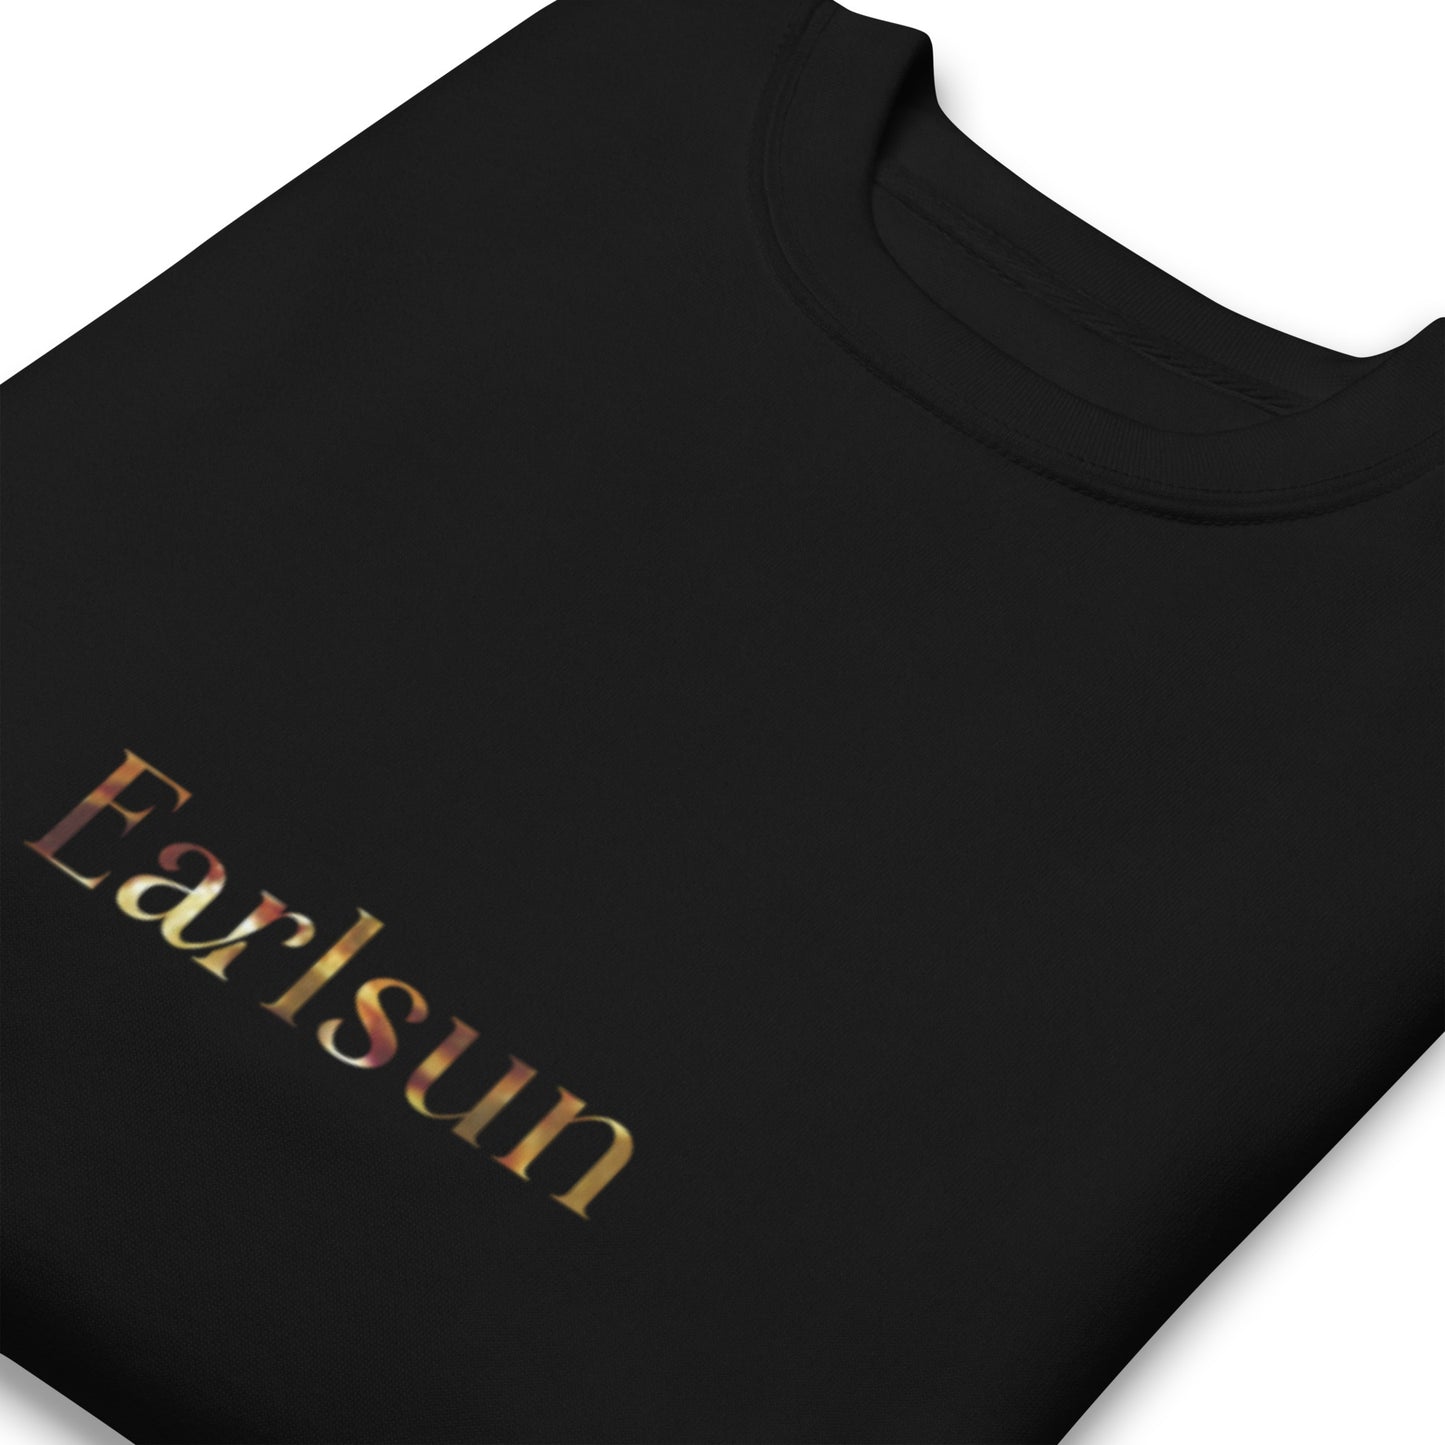 Earlsun brand sweat shirts (Fire)